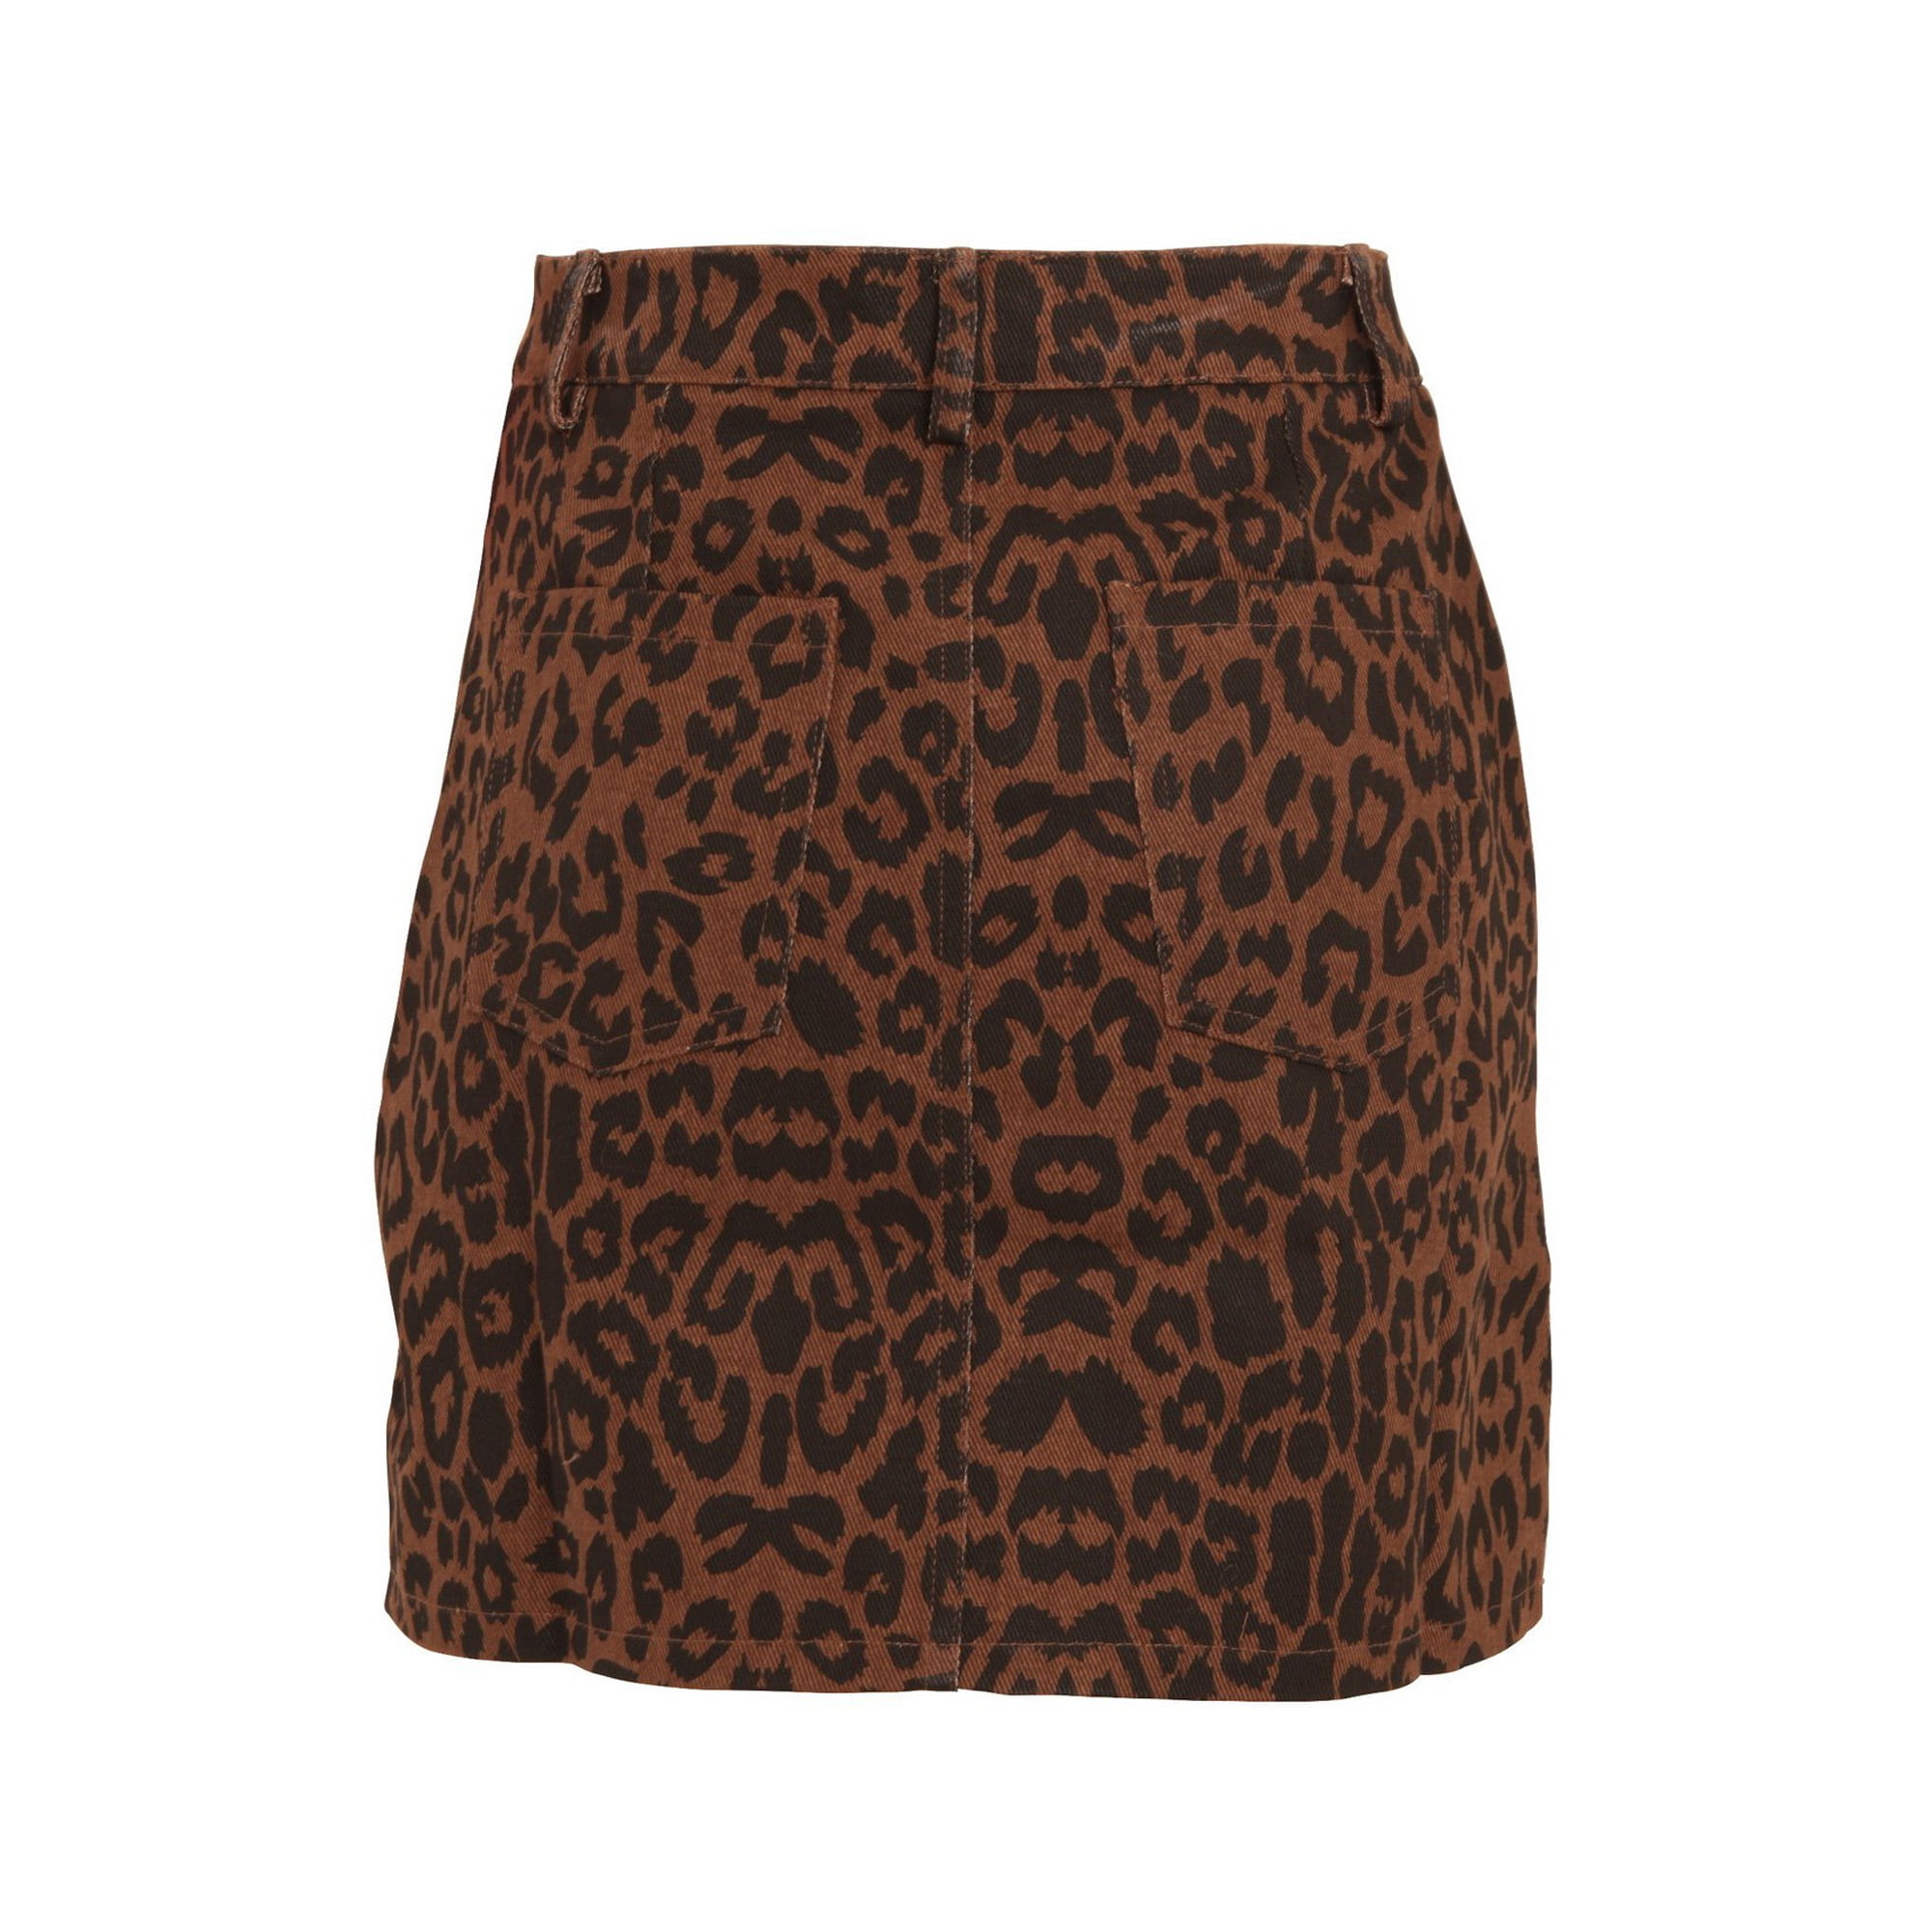 Topshop size 6 petite leopard print mini skirt with... - Depop